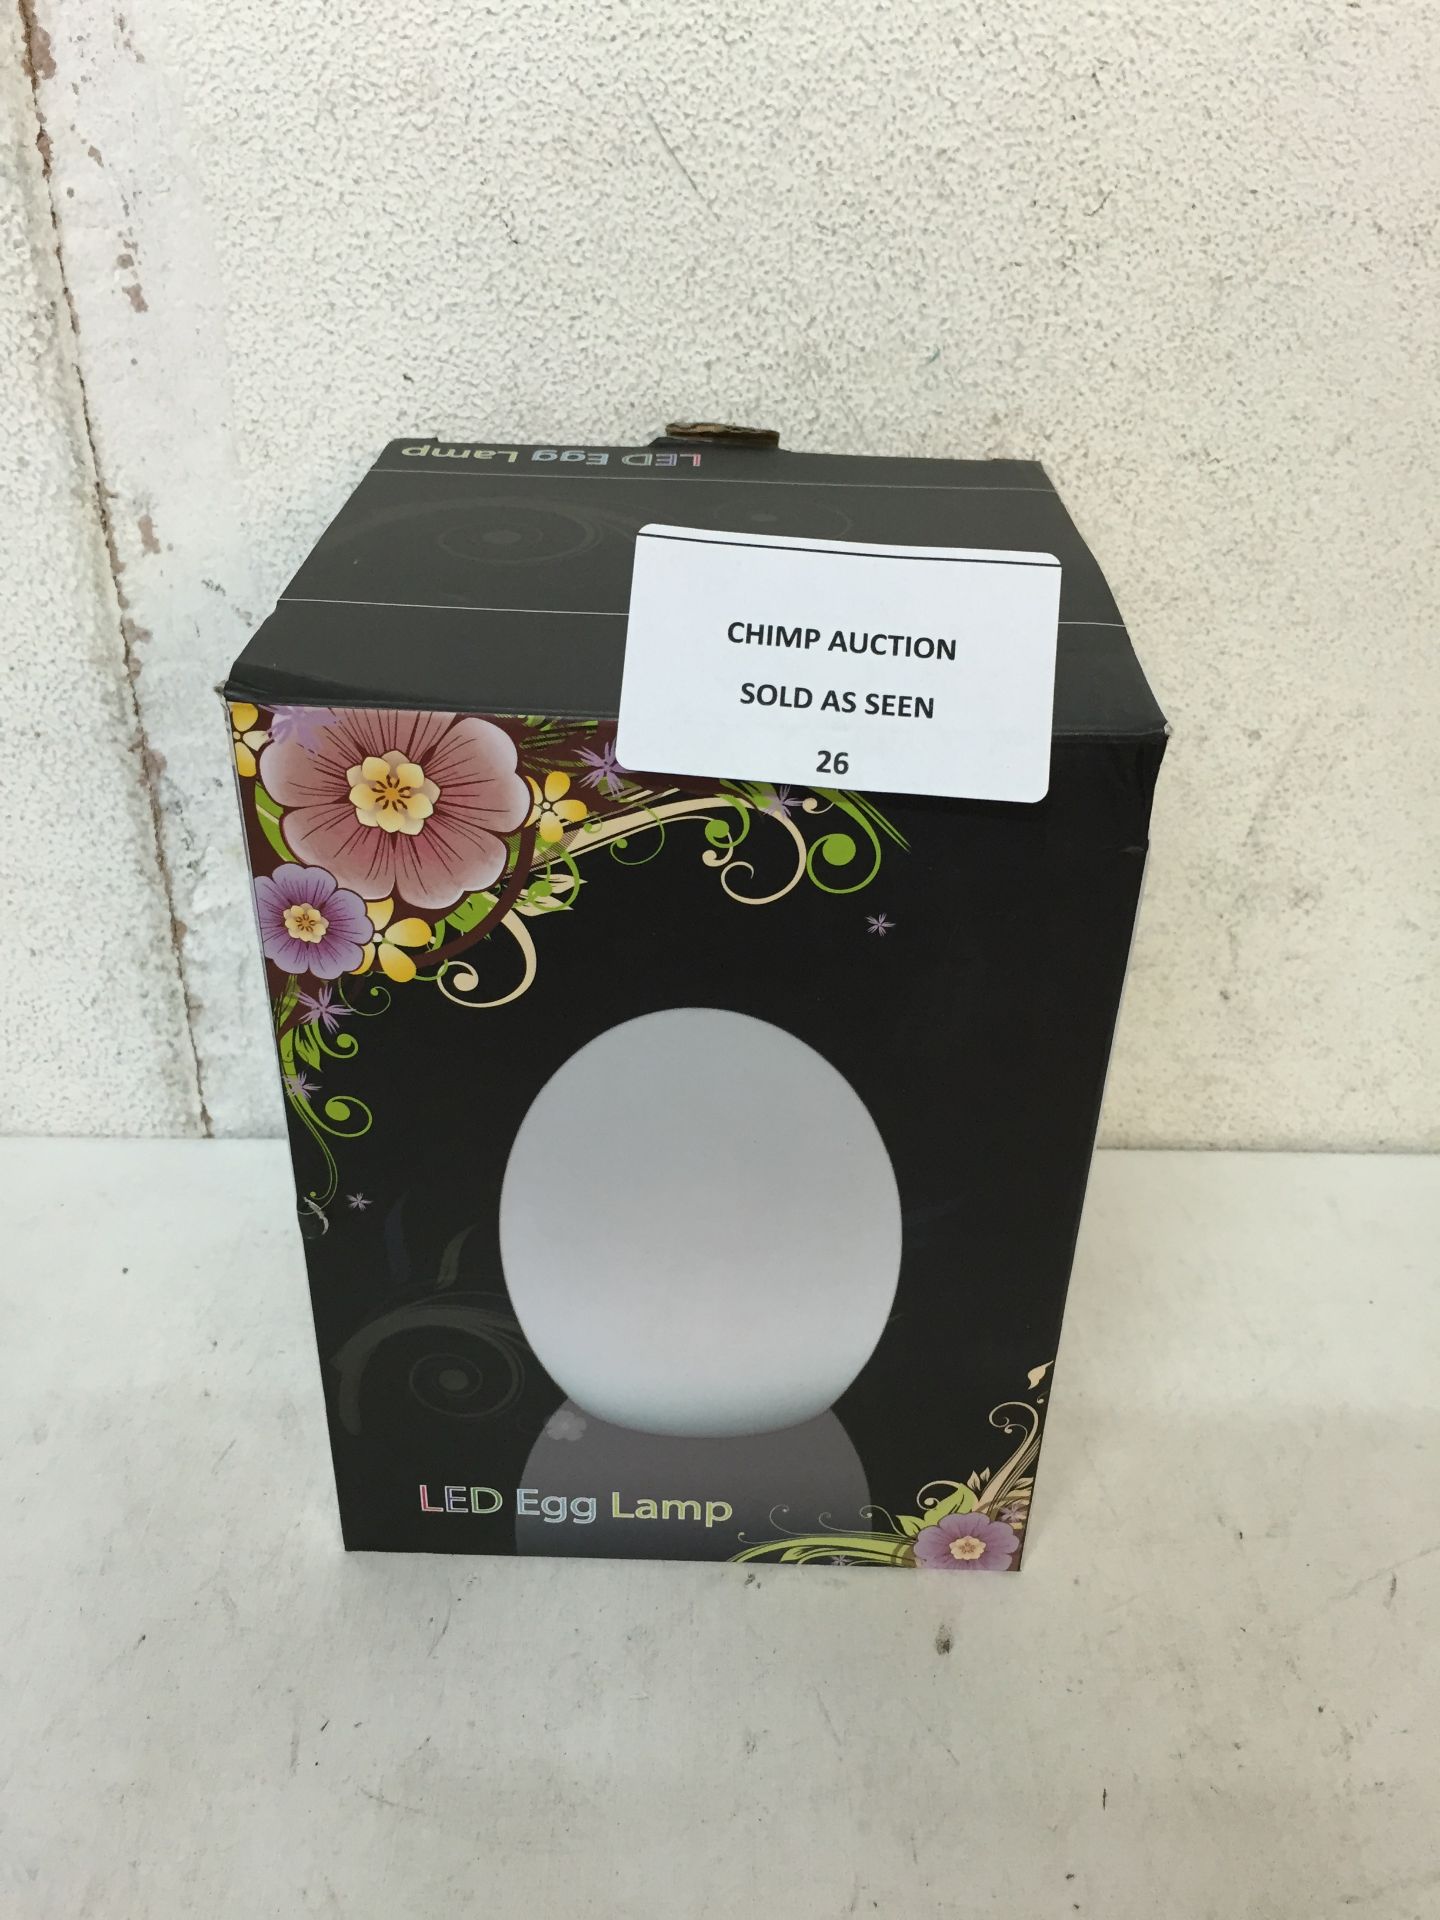 BOXED LED EGG LAMP / UNTESTED